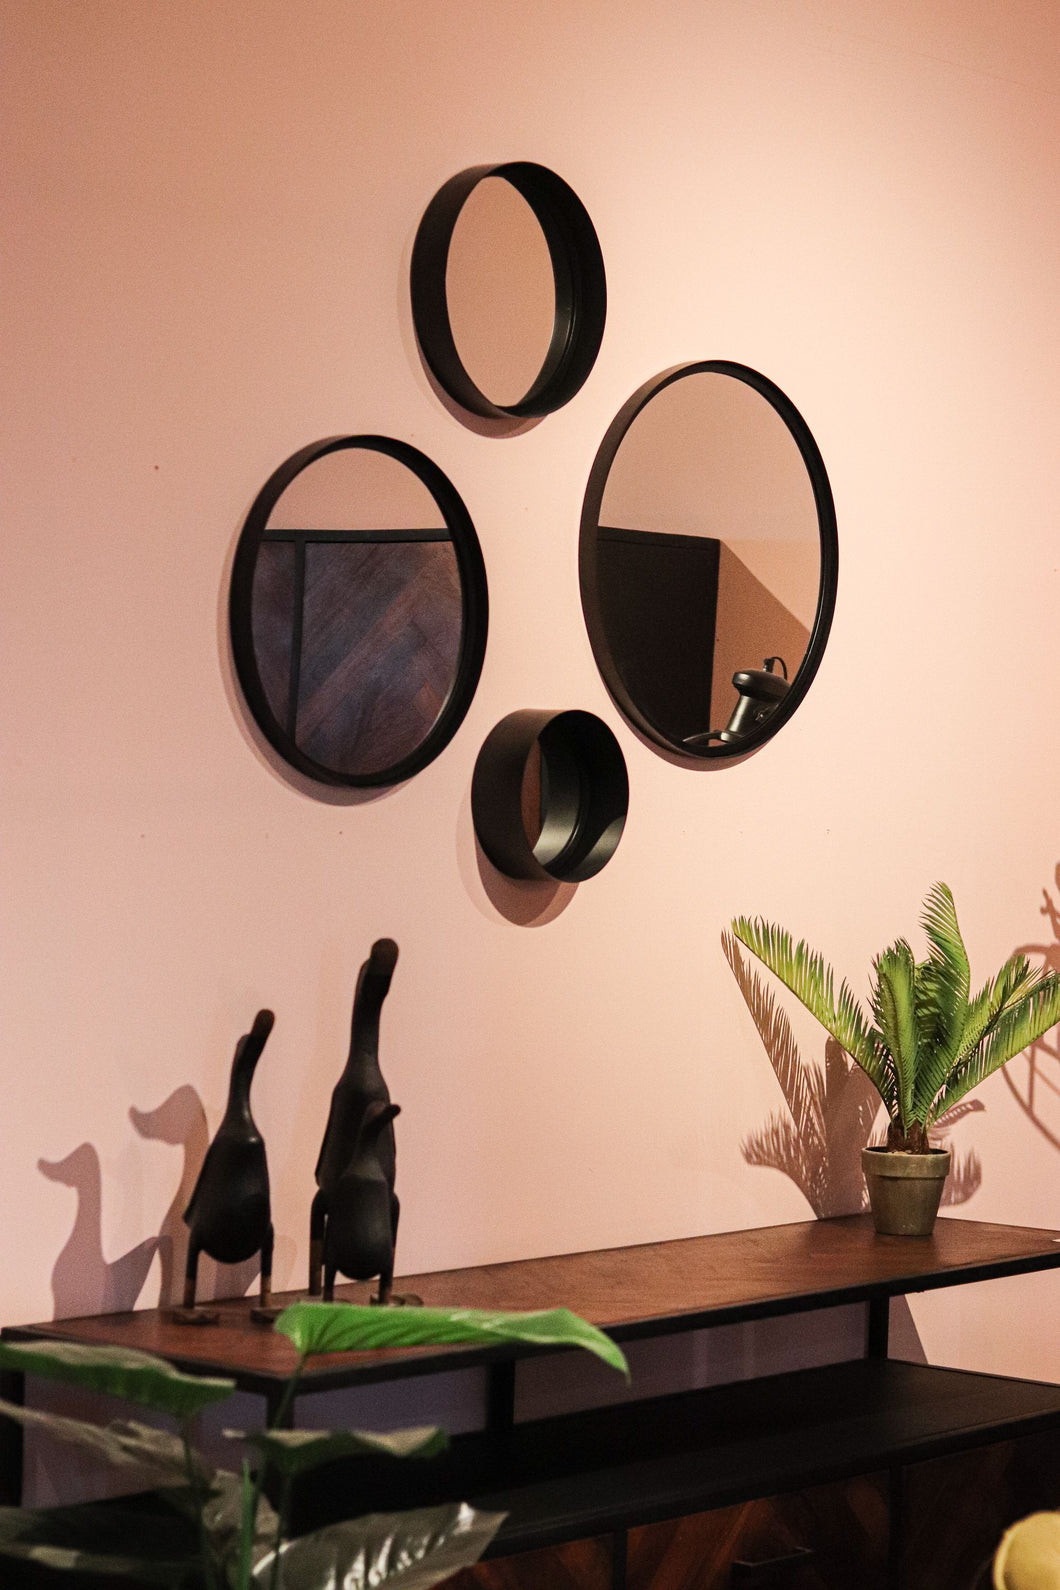 Wall mirror Fletcher Round - ø20 - black - Metal/glass